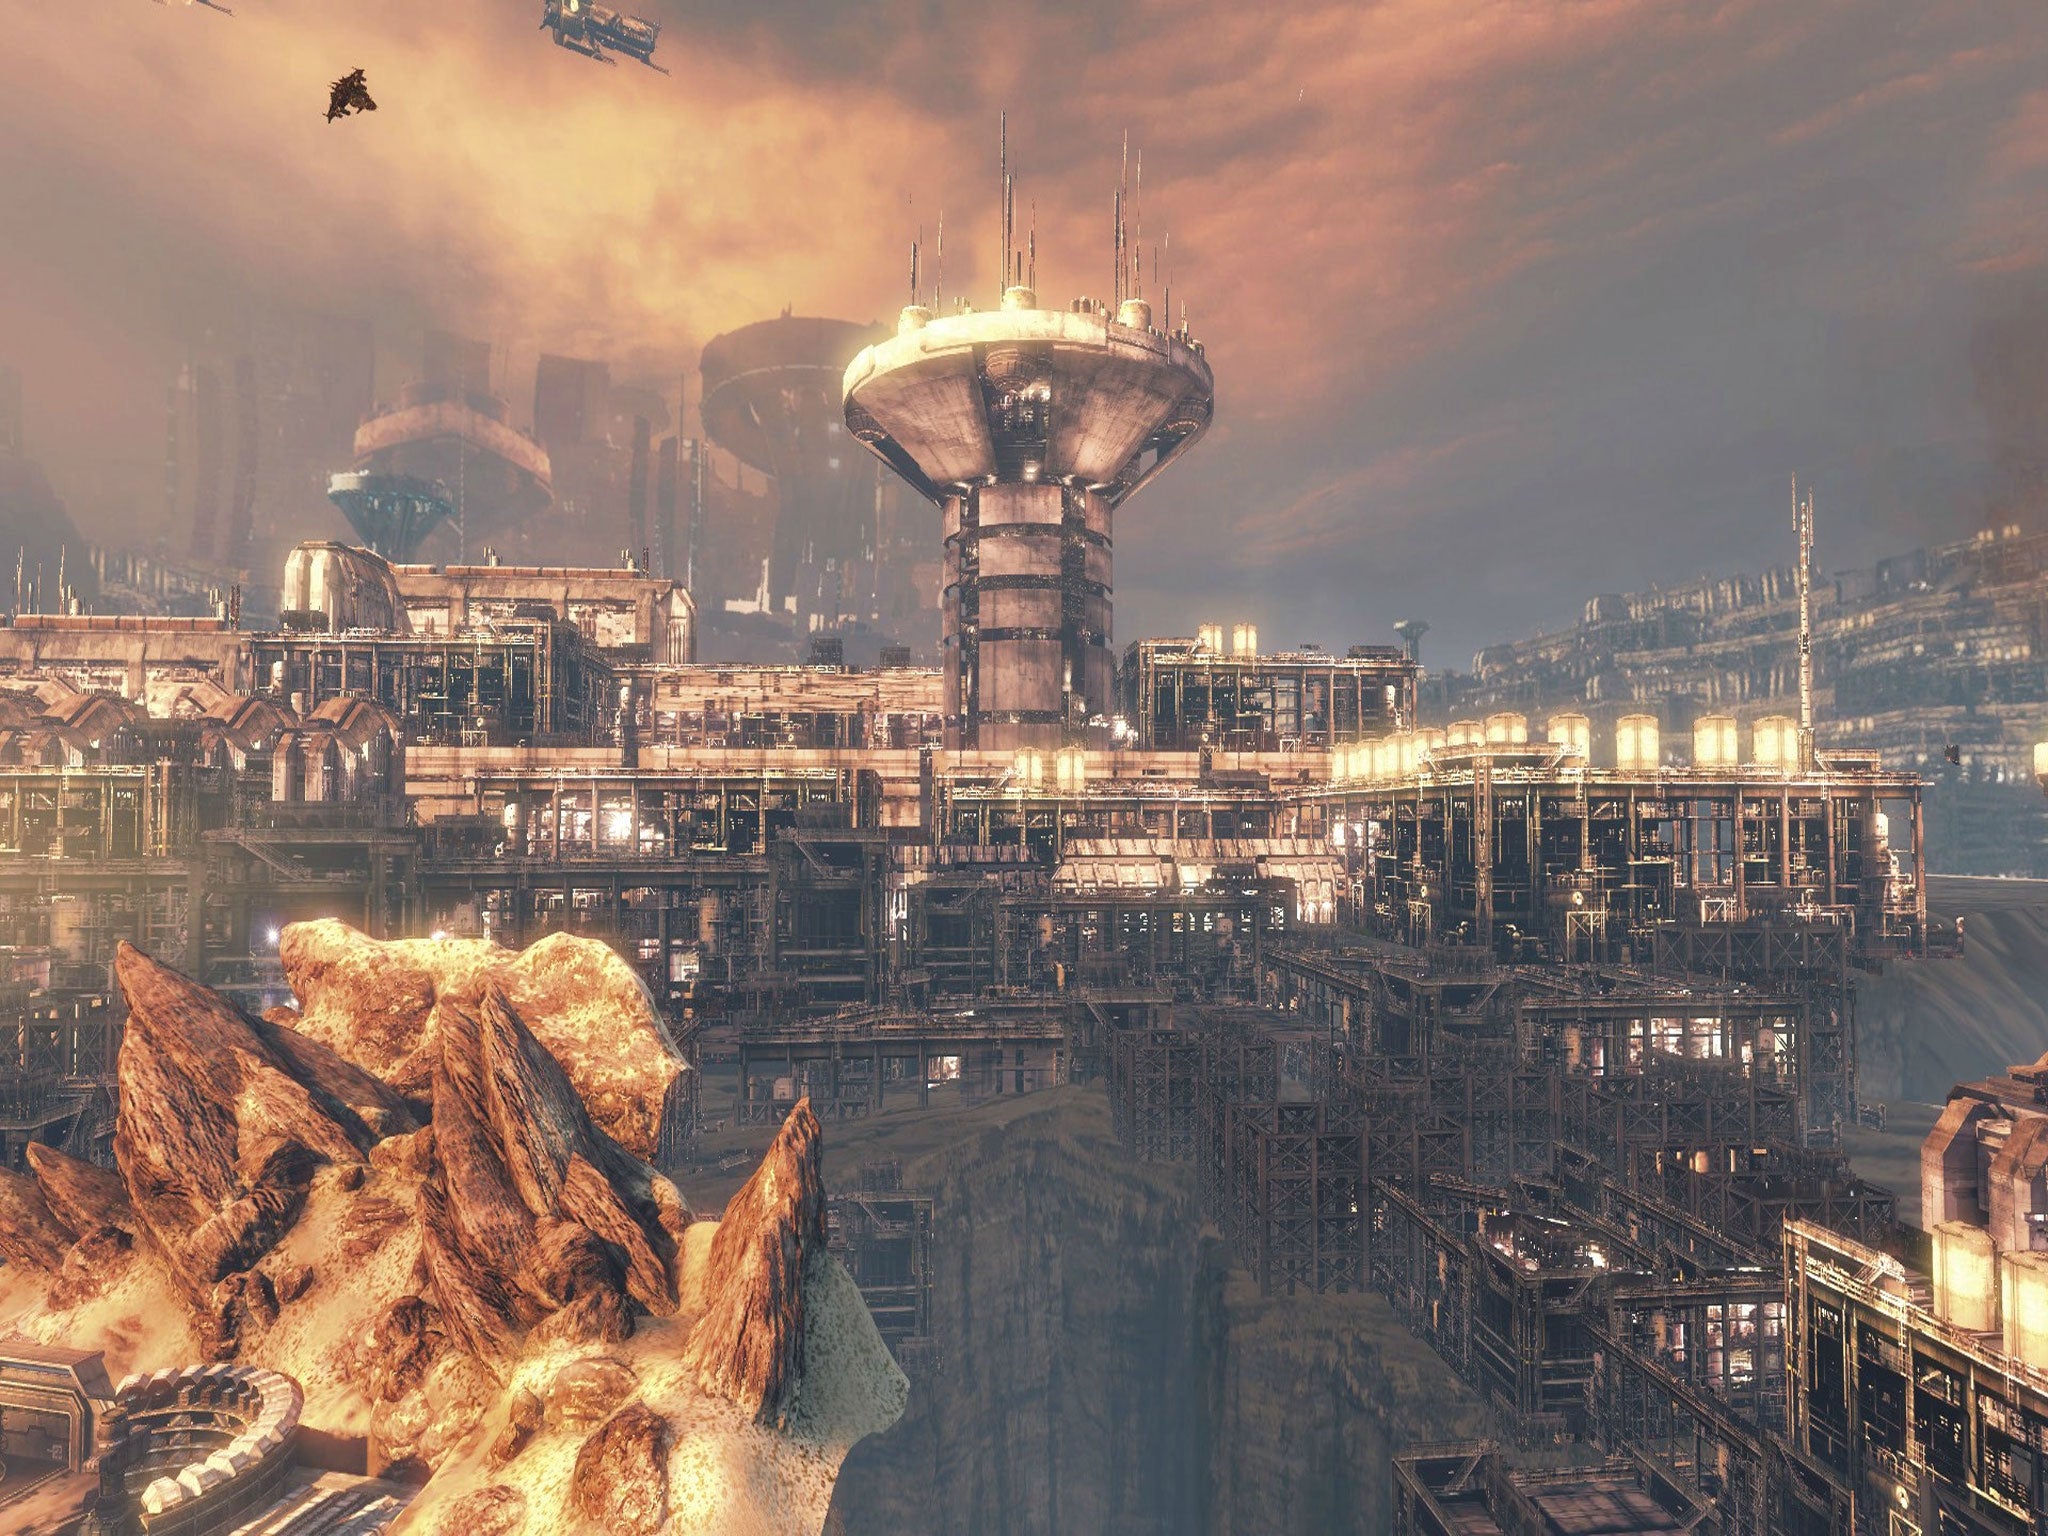 Titanfall 2's New Multiplayer Mode Revealed